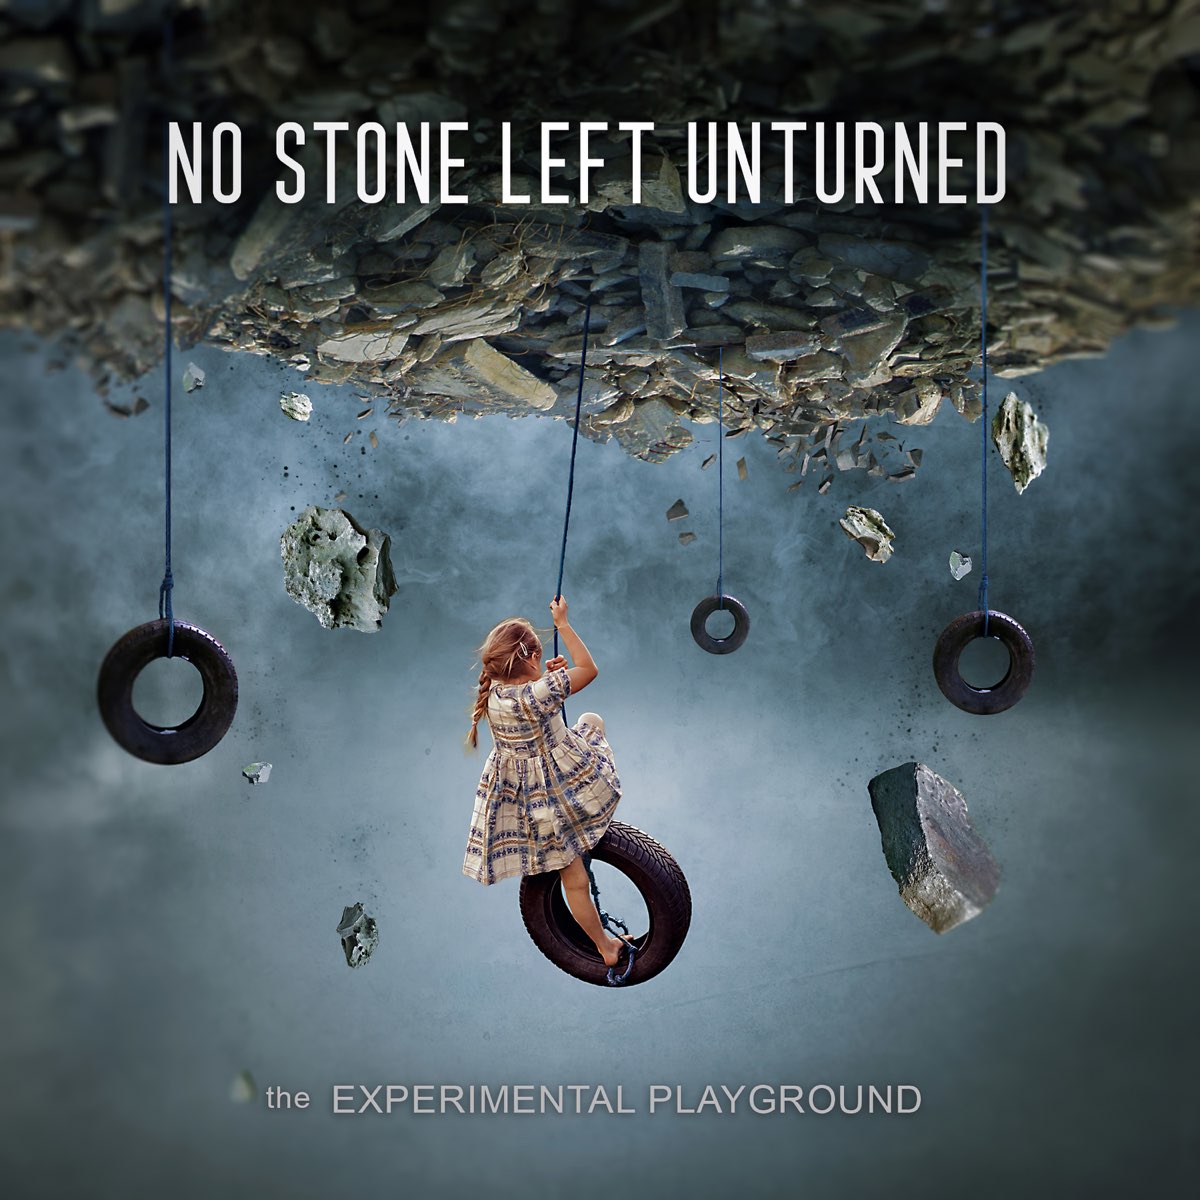 No Stone left Unturned. Leave no Stone Unturned. A Stone left Unturned. The Rolling Stones no Stone Unturned.